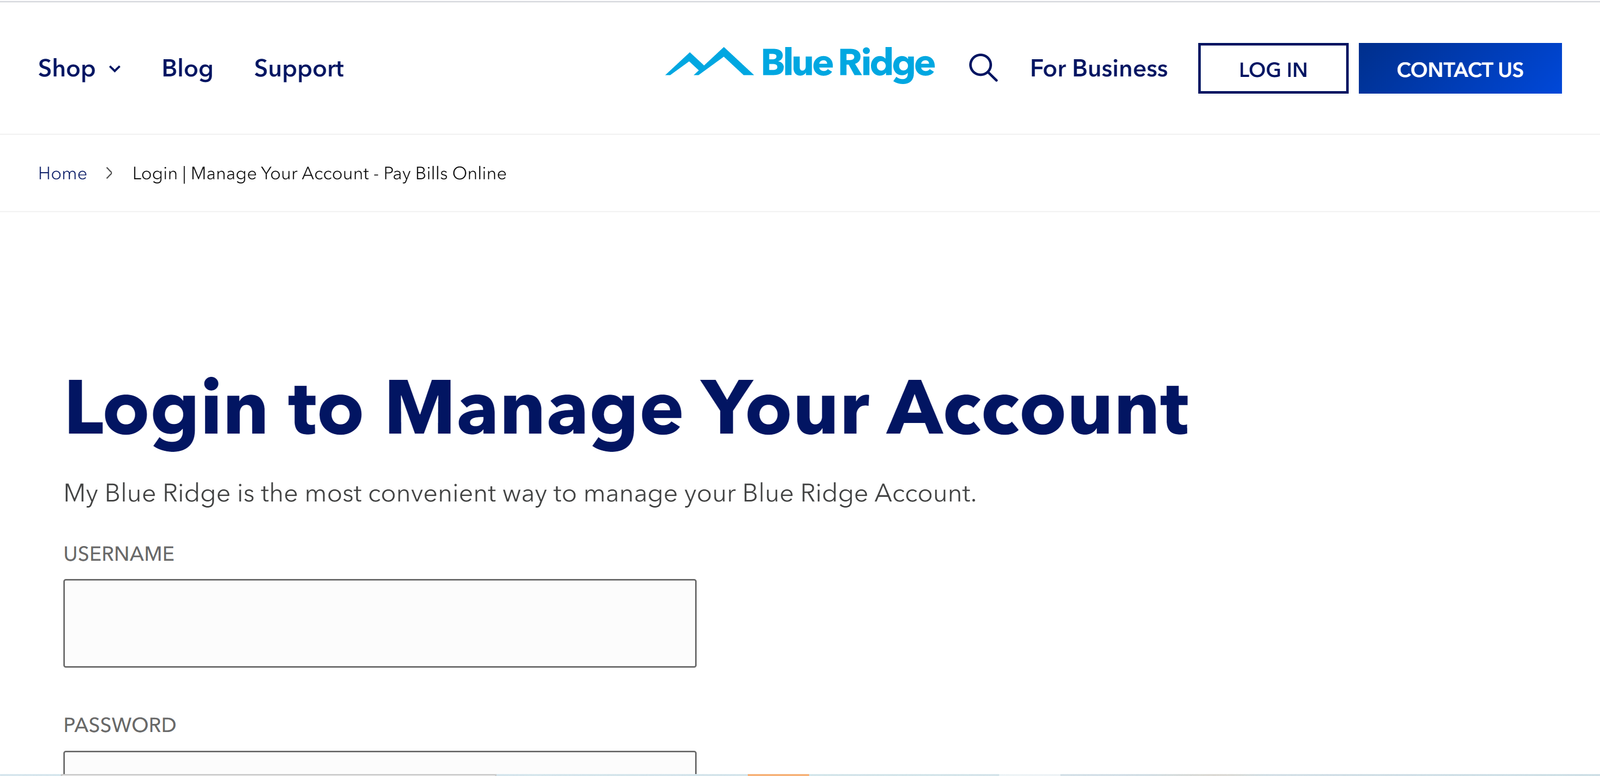 Blue Ridge Communications Login, Bill Payment & Customer Support Information